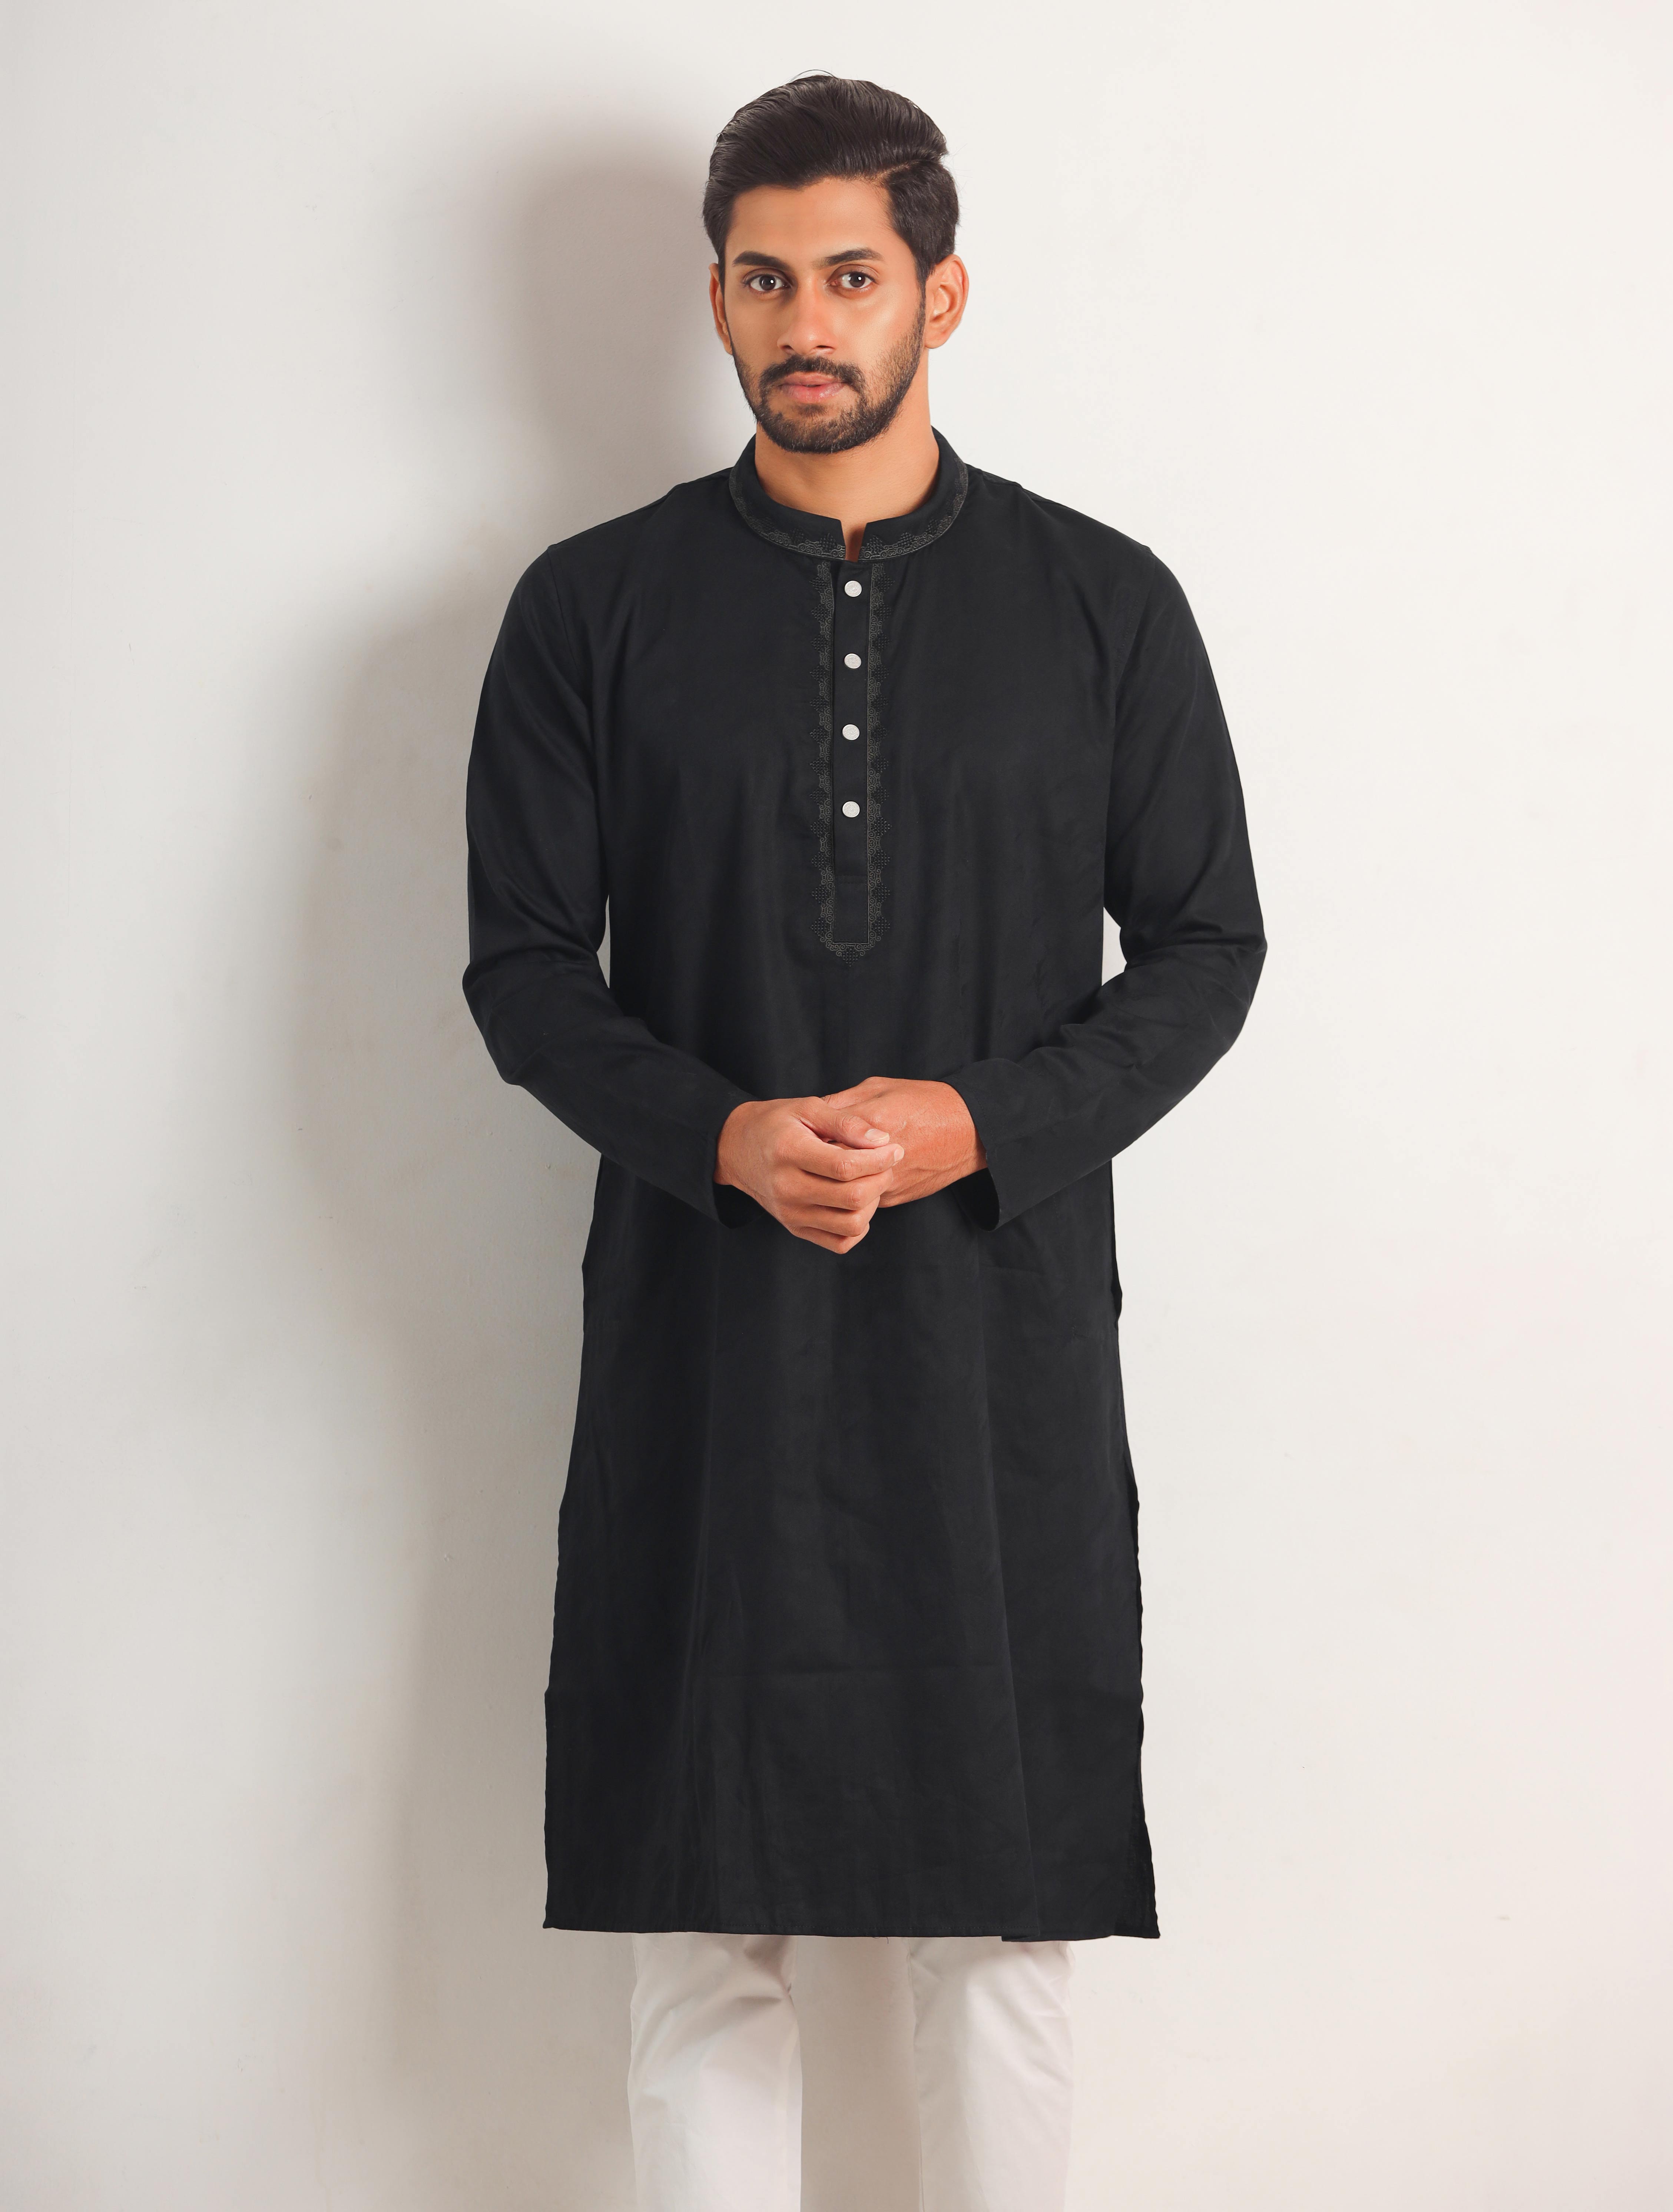 Textured Black Eid Panjabi With Embroidery On Neck